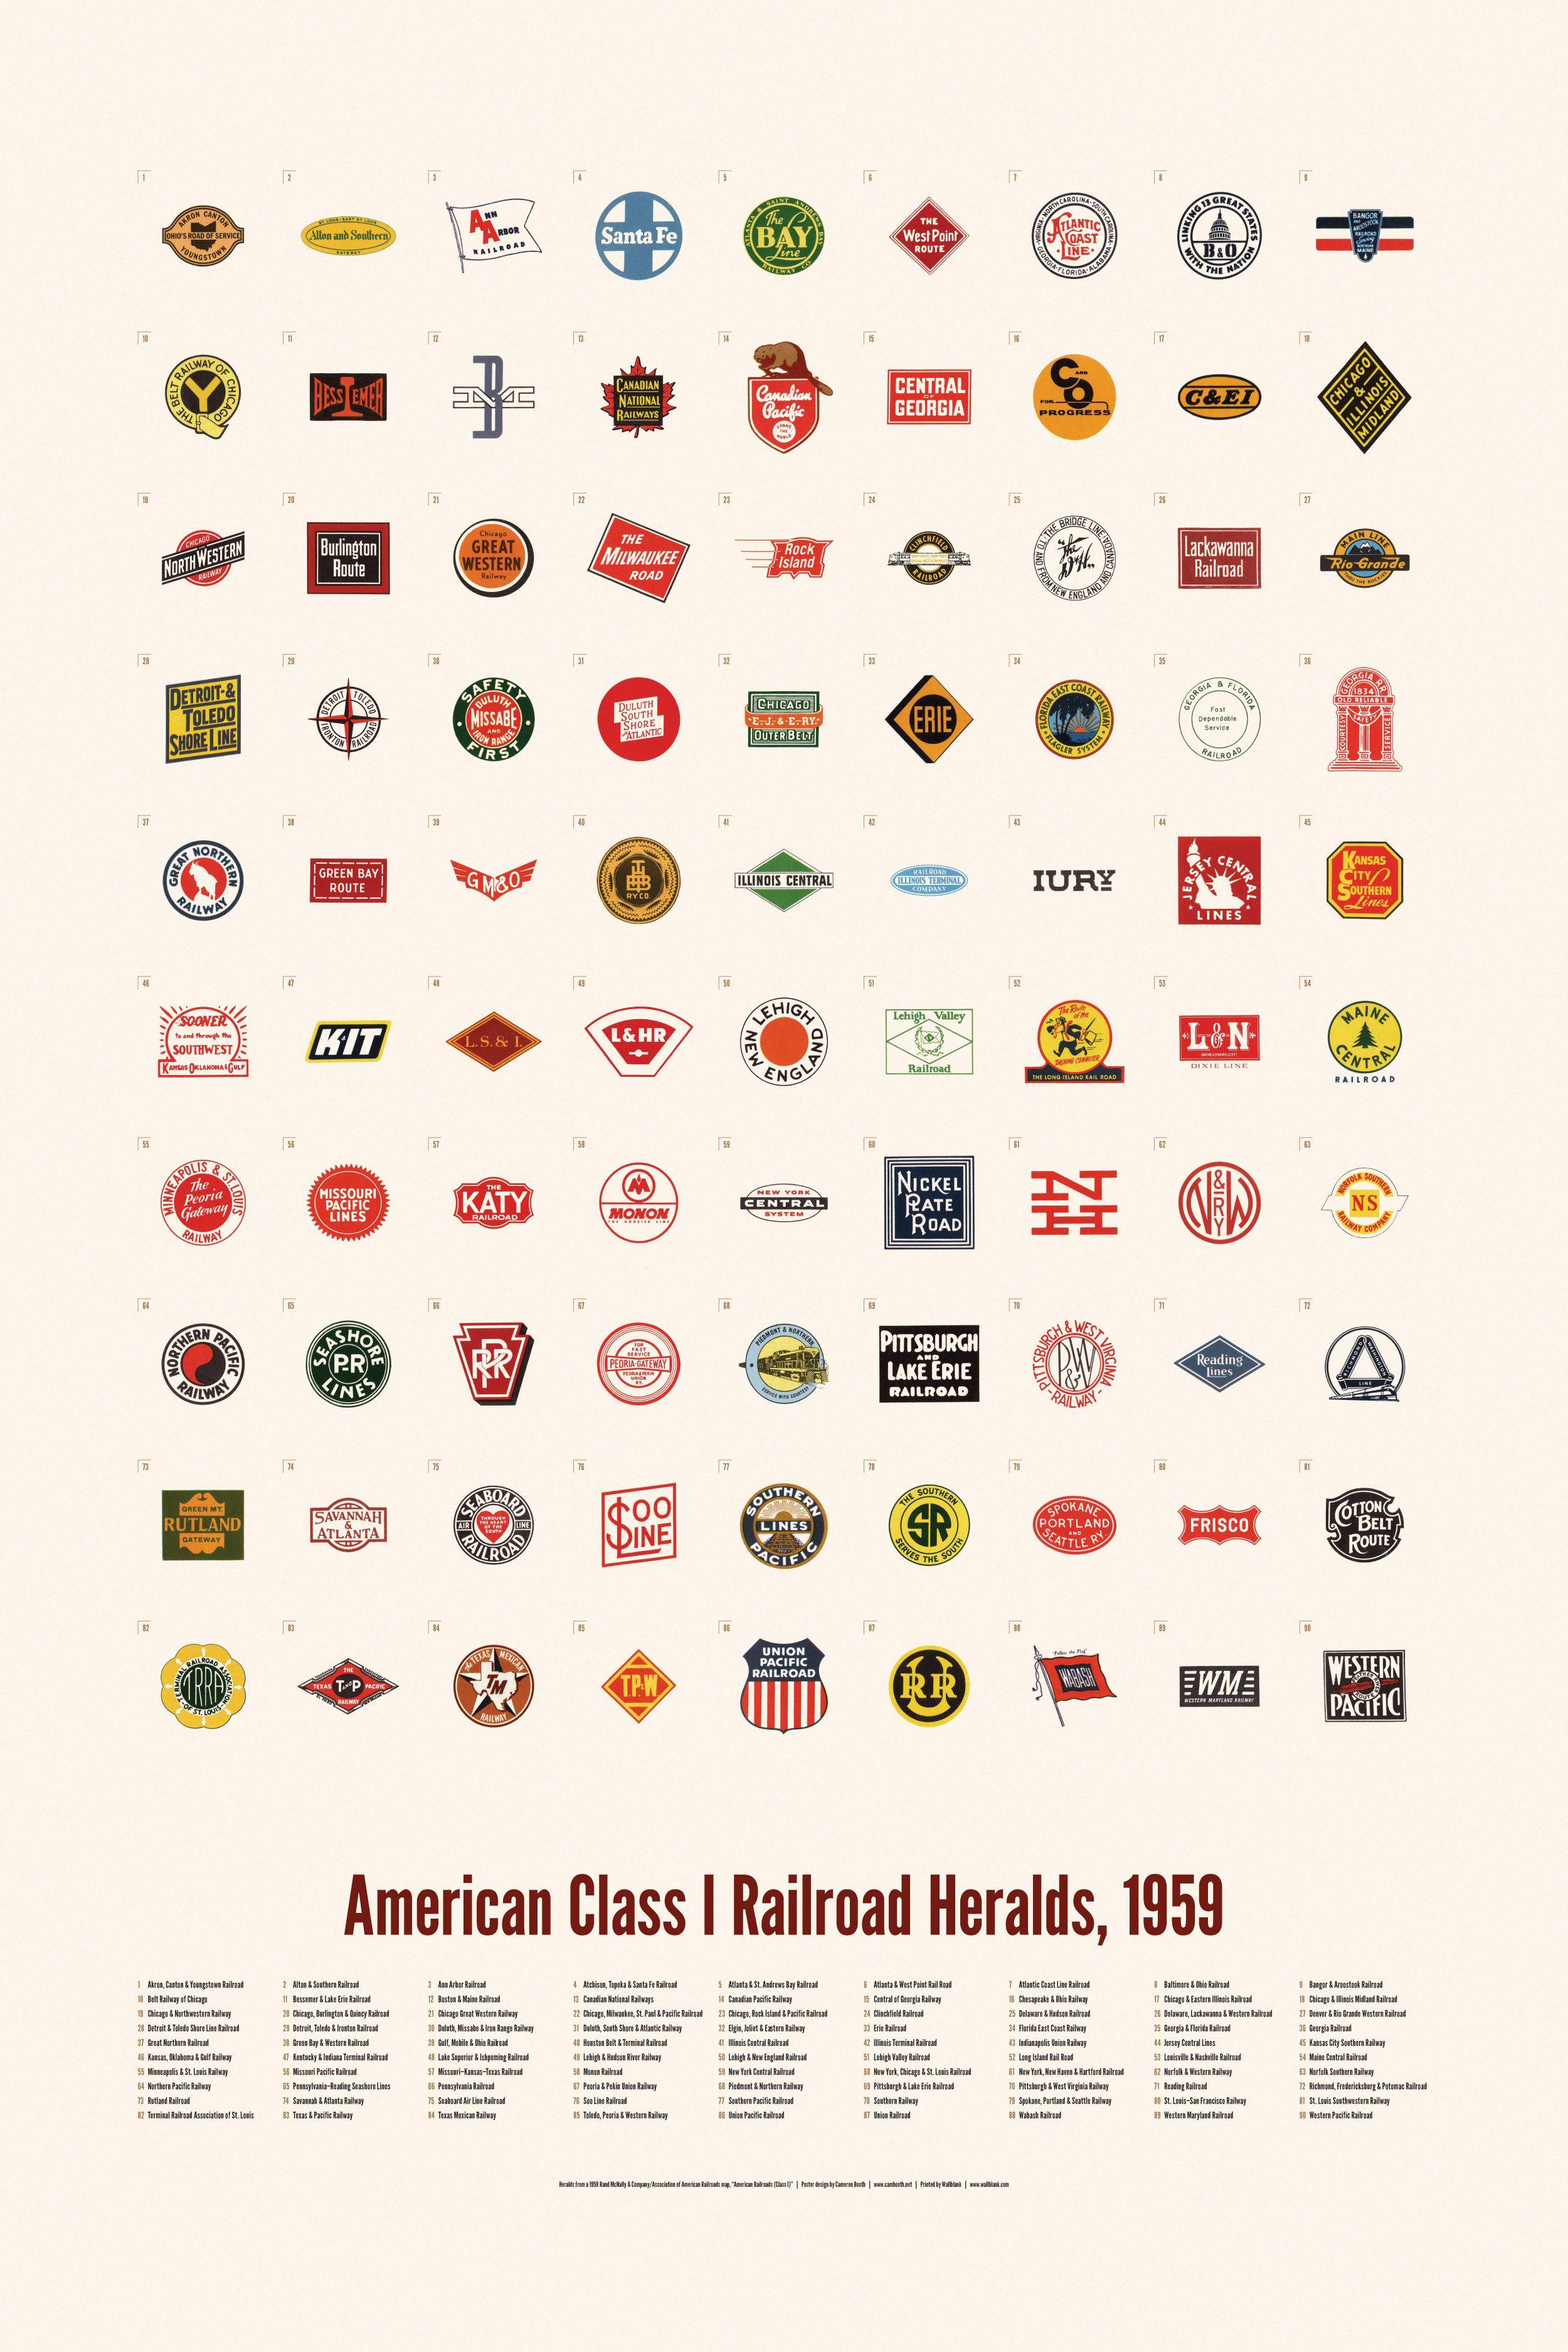 Old Railroad Logo - Project: American Class I Railroad Heralds, 1959